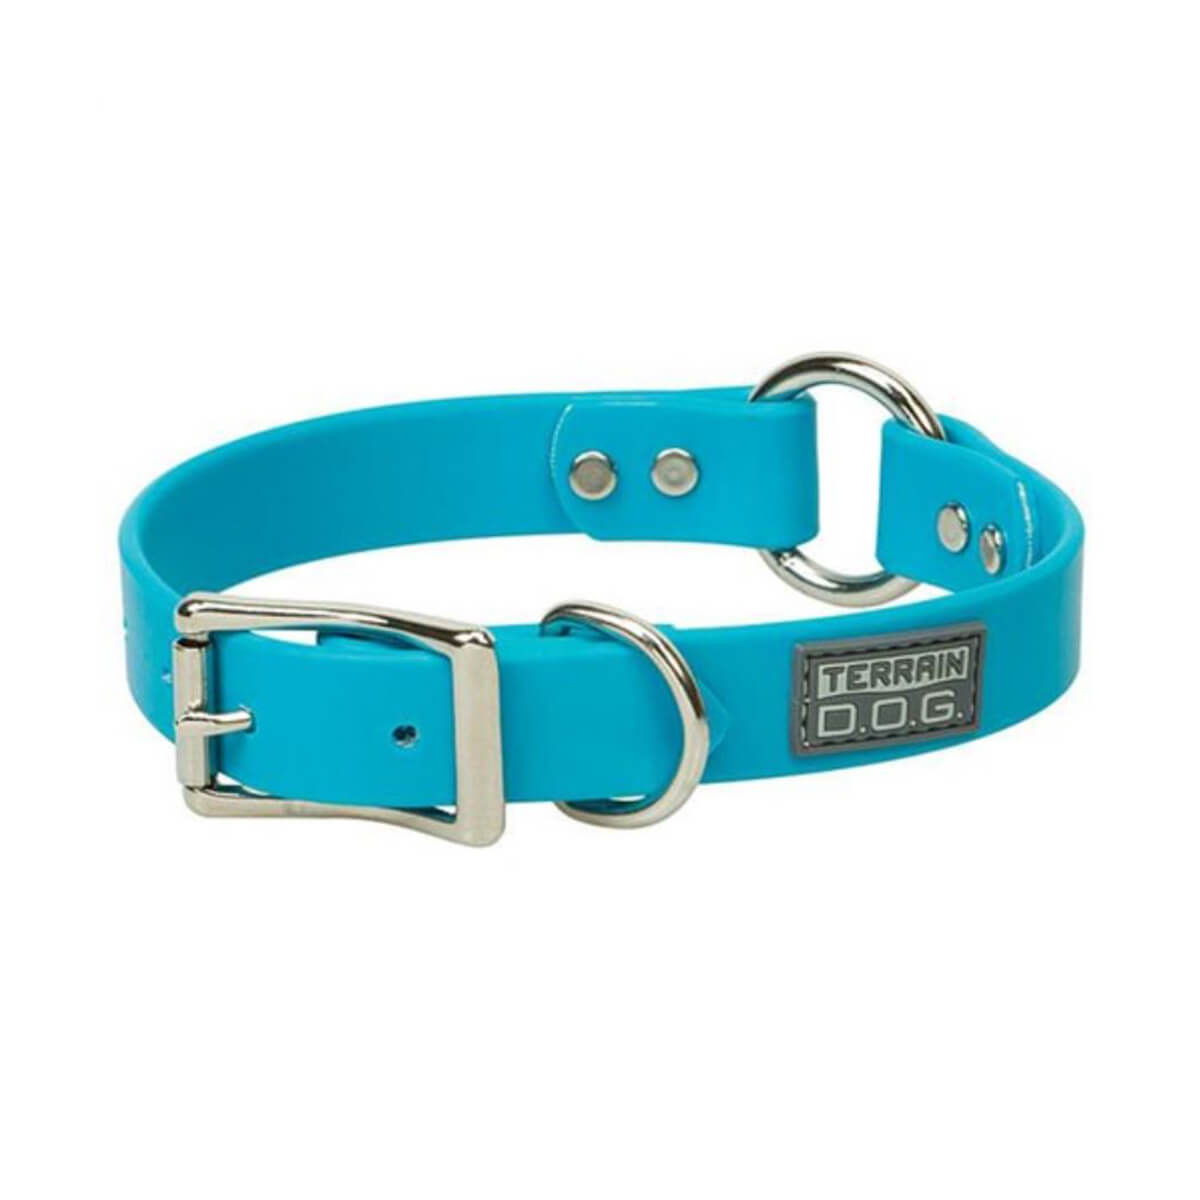 Terrain D.O.G.® X-Treme Adventure Hunting Dog Collar - Blue